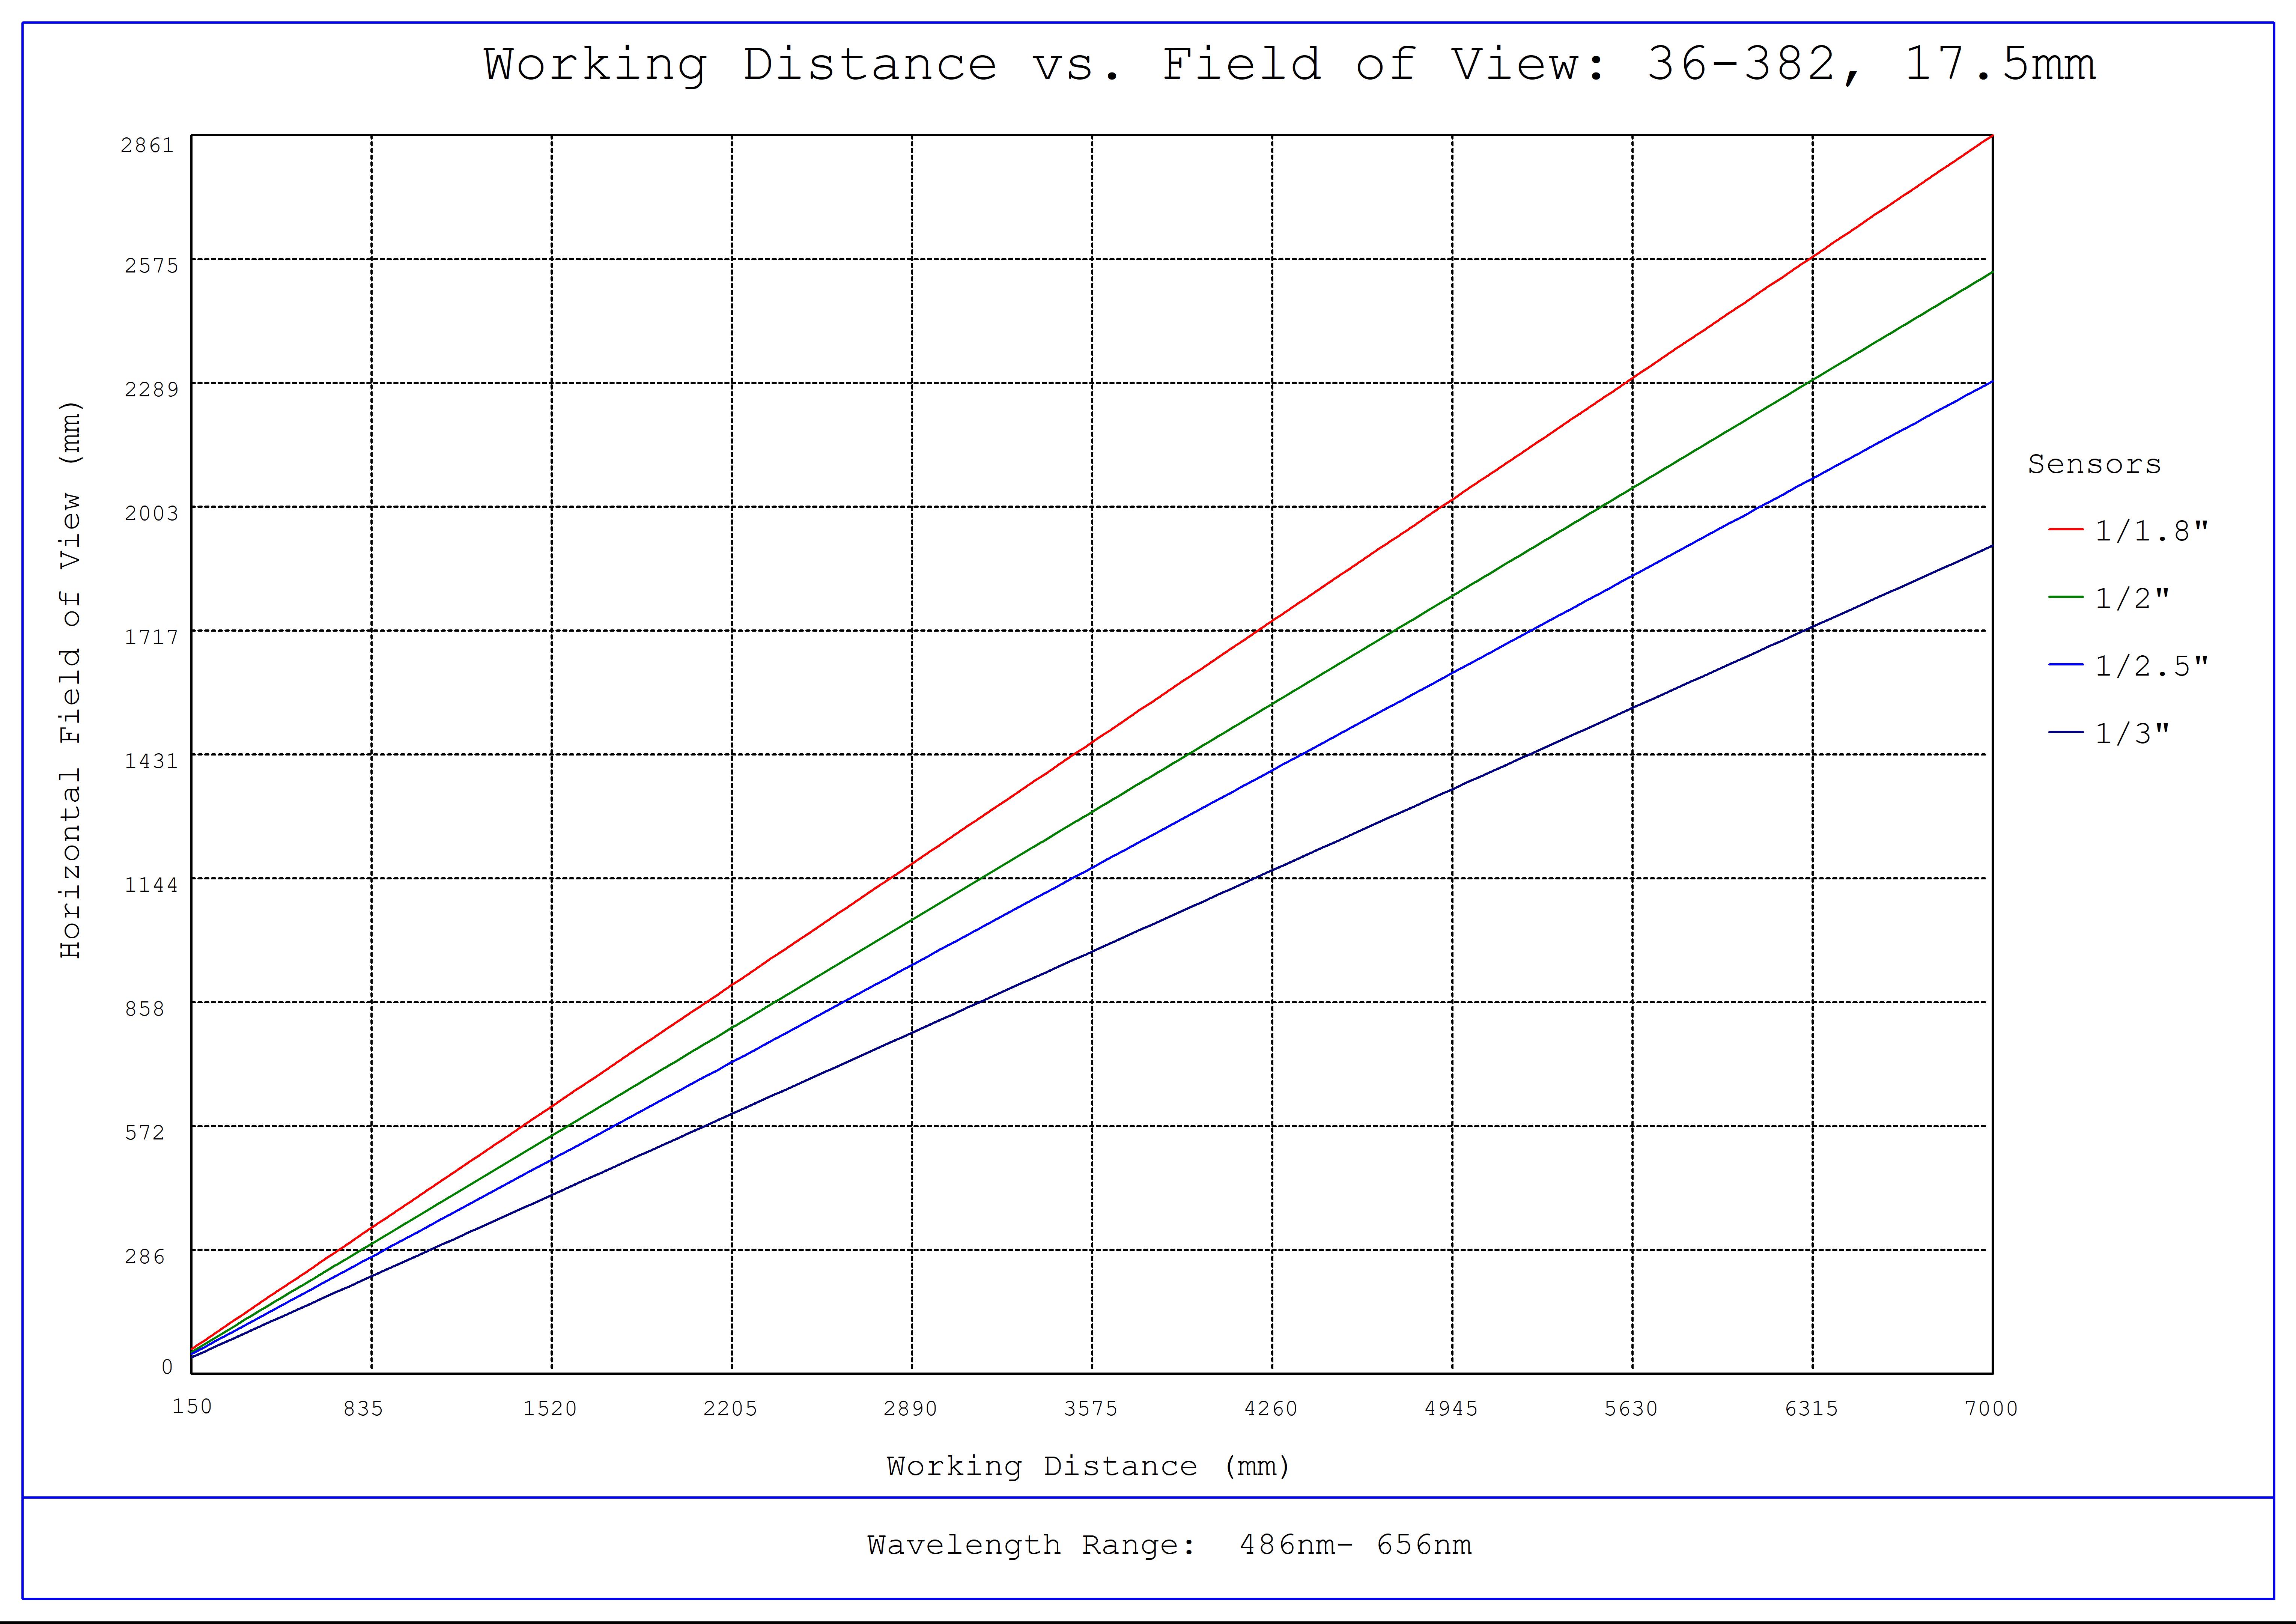 #36-382, 17.5mm FL f/5.6, Rugged Blue Series M12 Lens, Working Distance versus Field of View Plot